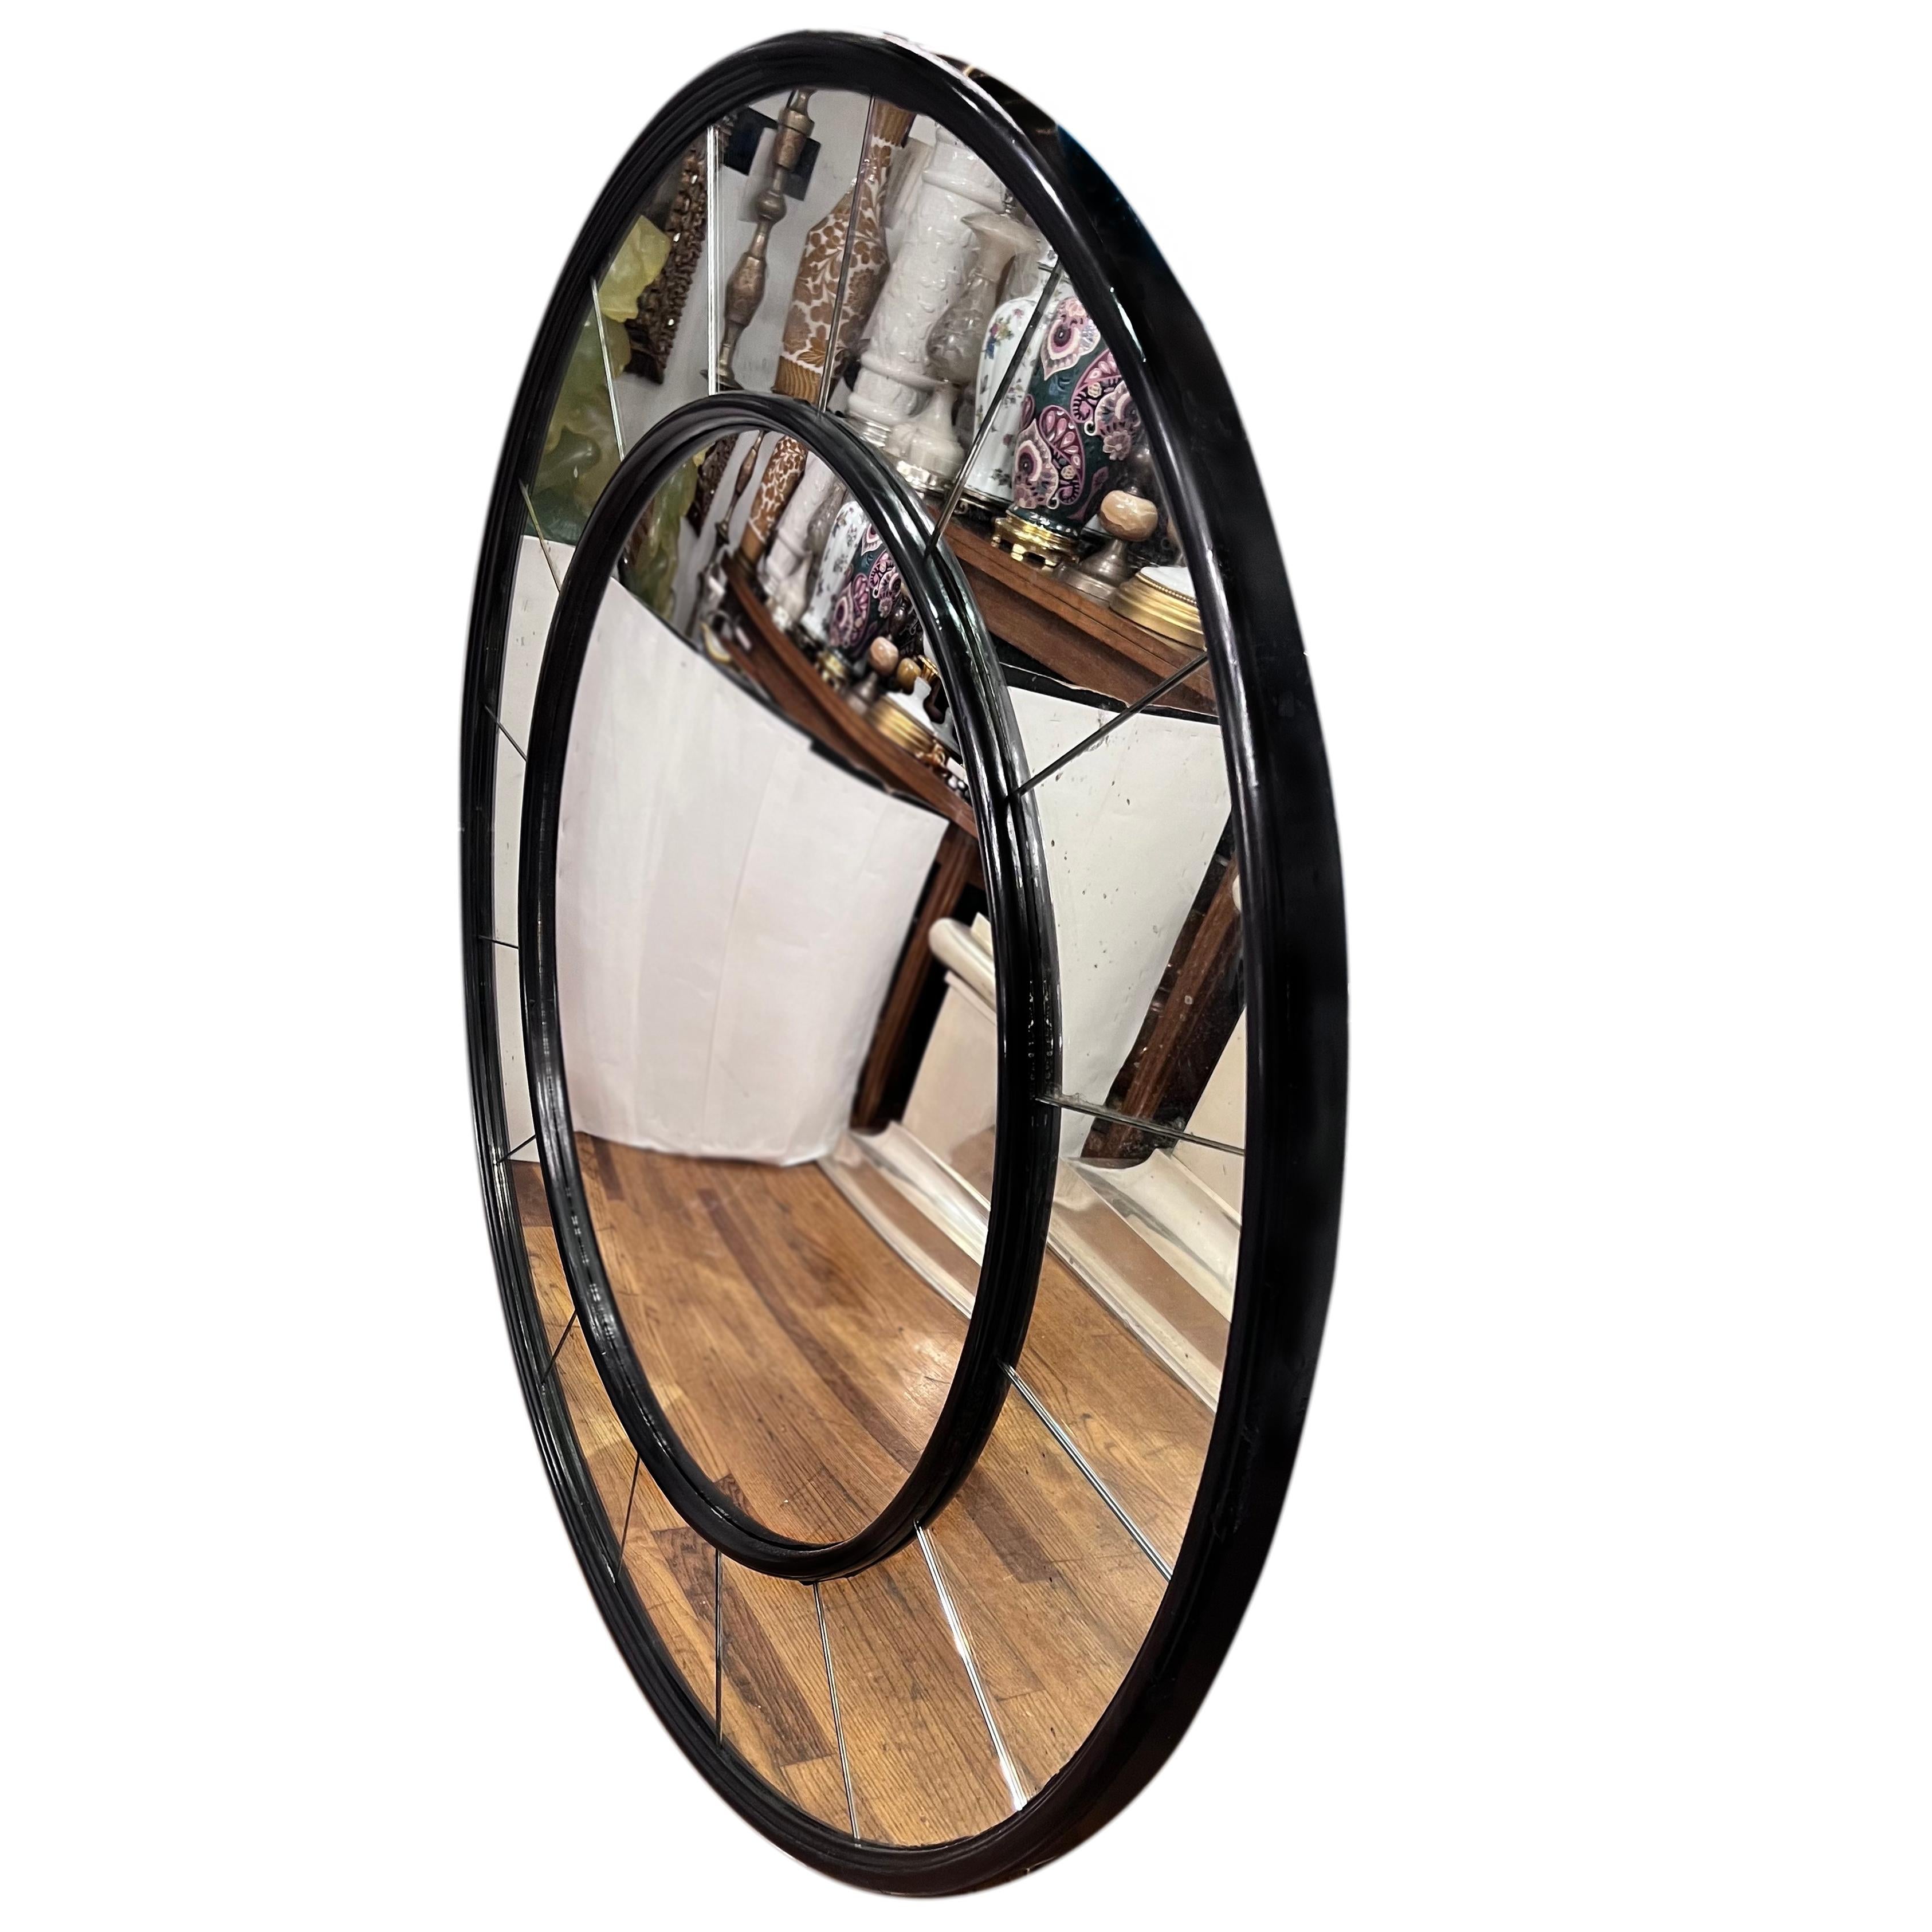 A circa 1960's Italian ebonized wood mirror with mirror panels frame.

Measurements:
Diameter: 46